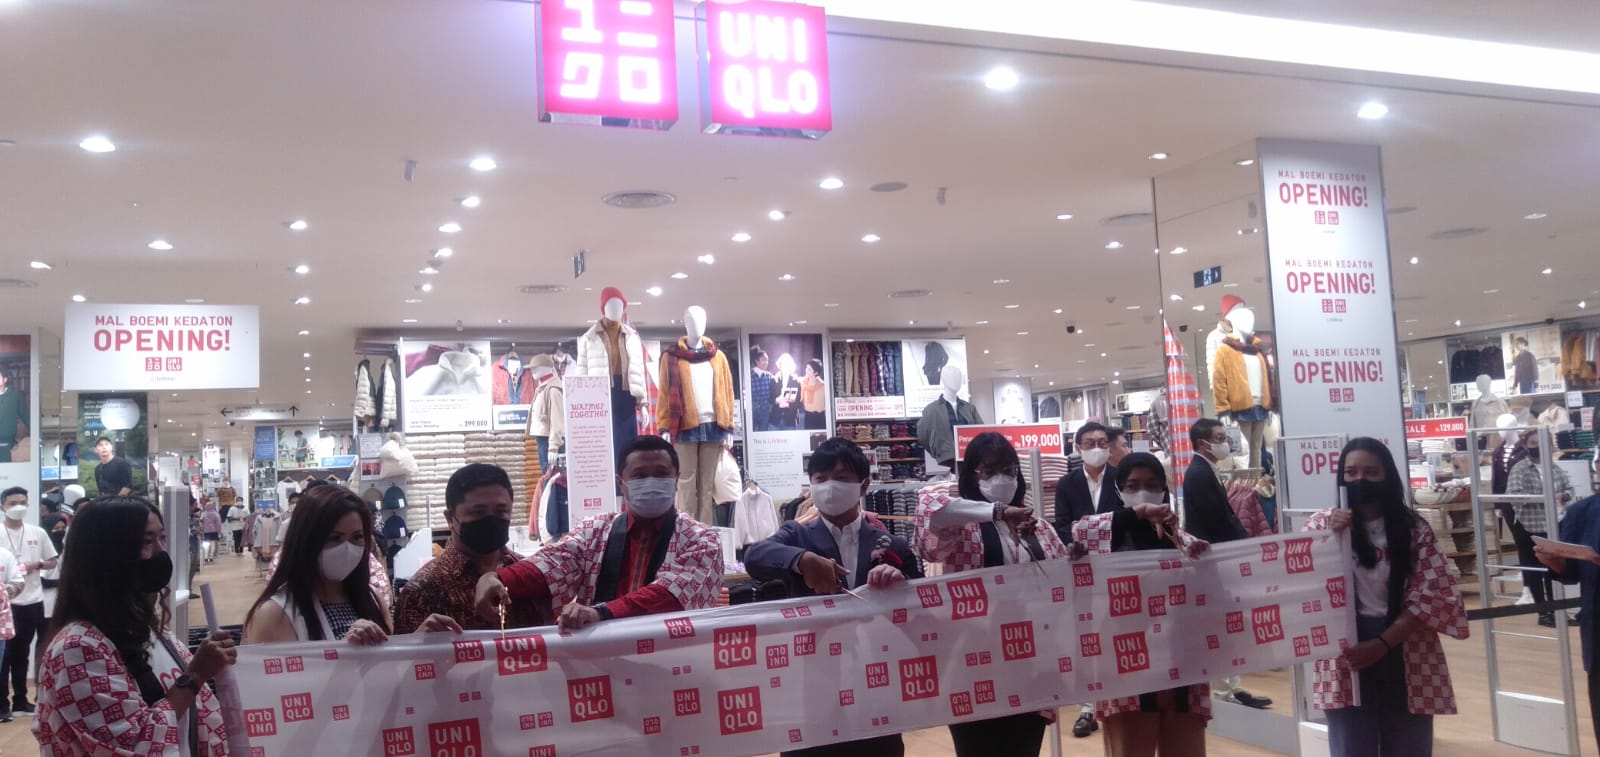 Resmi Dibuka, Uniqlo Mall Boemi Kedaton Lampung Diserbu Pengunjung